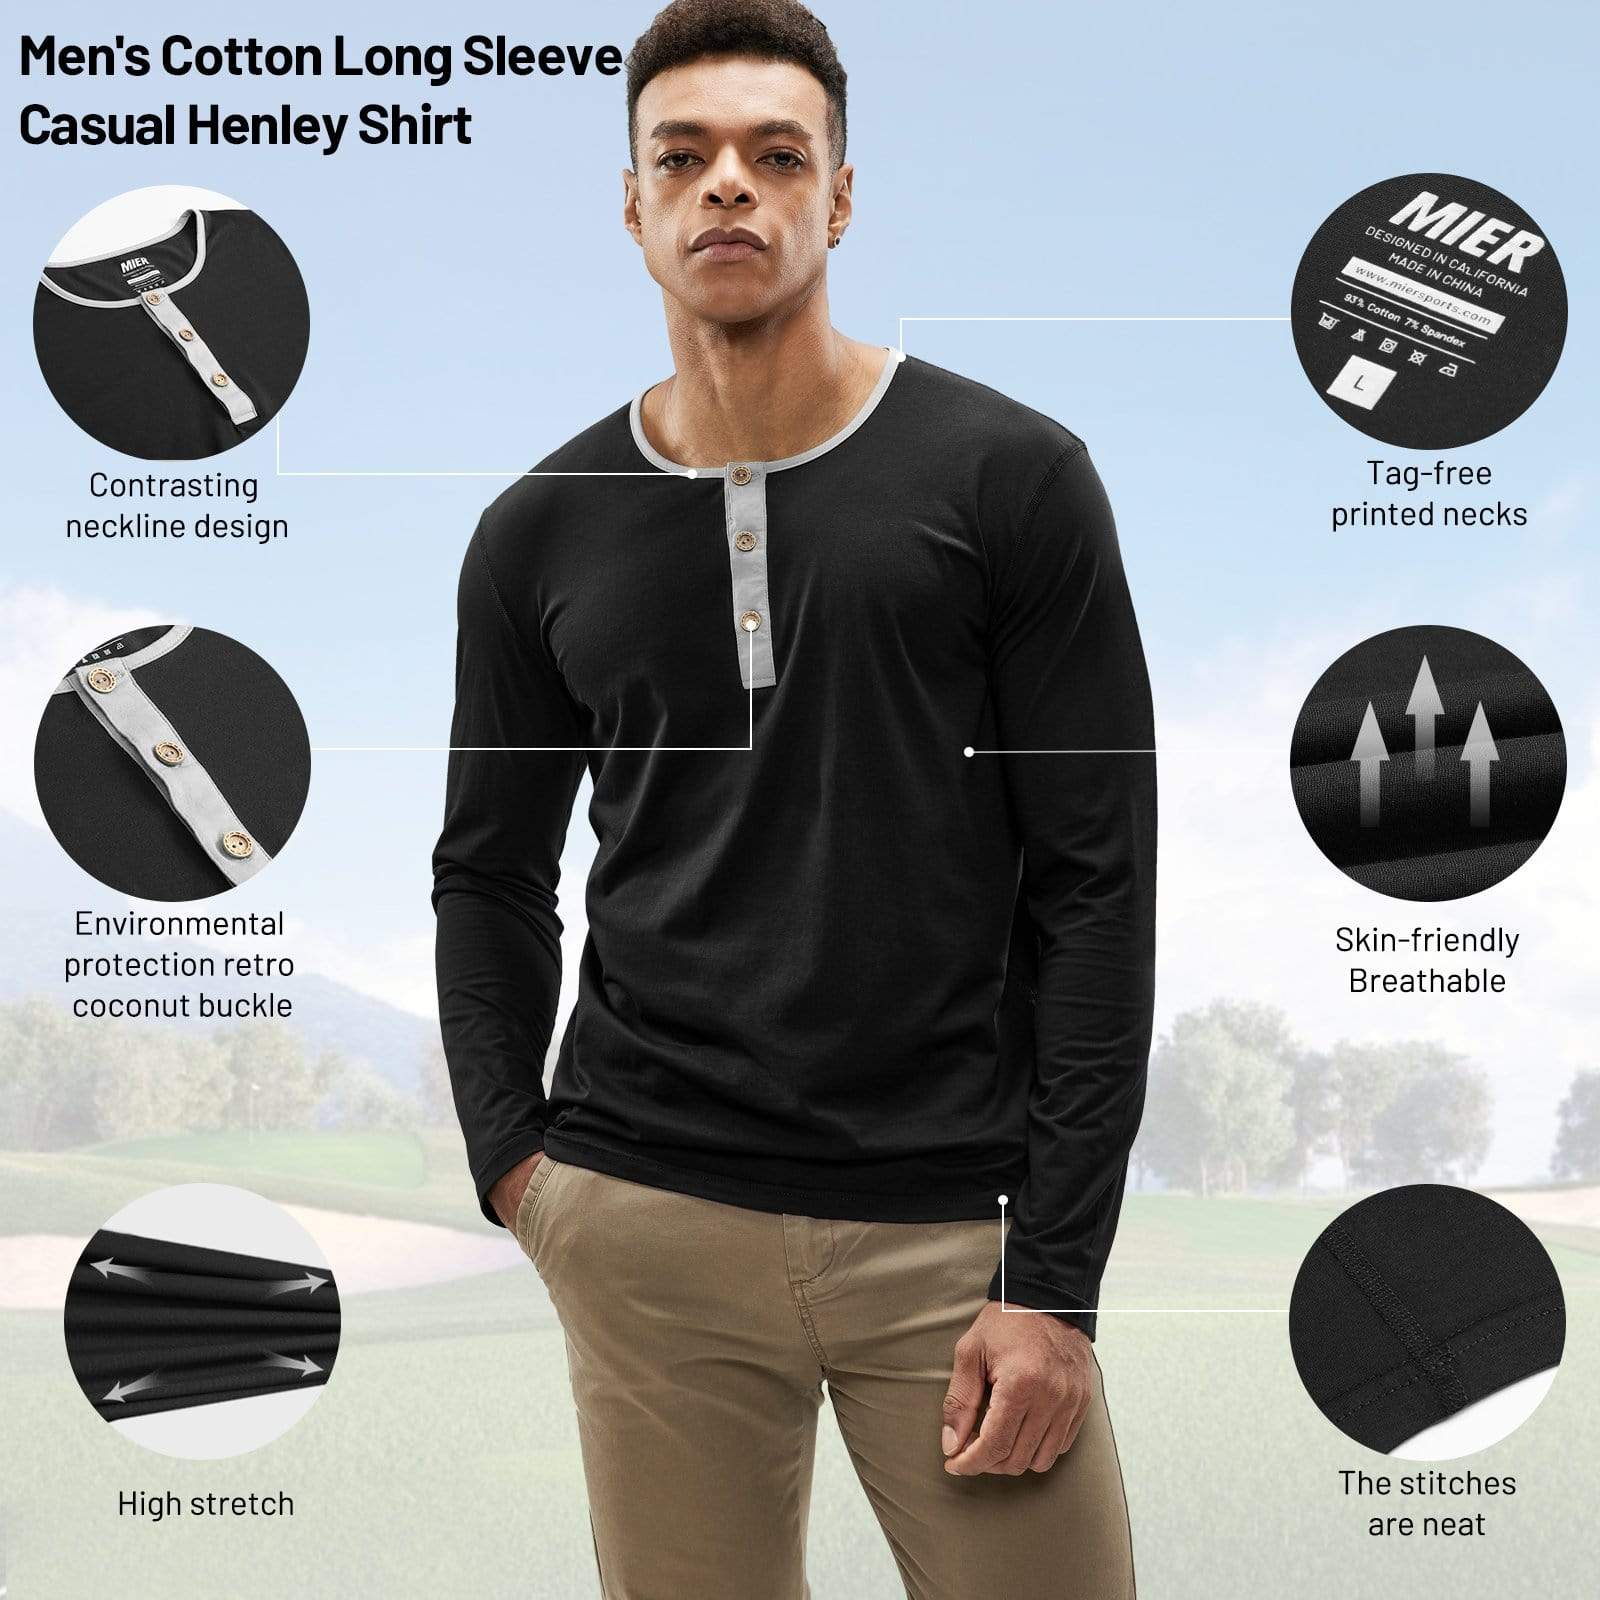 MIER Long Sleeve Henley Shirts for Men Casual Fashion Cotton Tee Shirt Collarless Tshirt for Work Lounge Beach Golf MIER